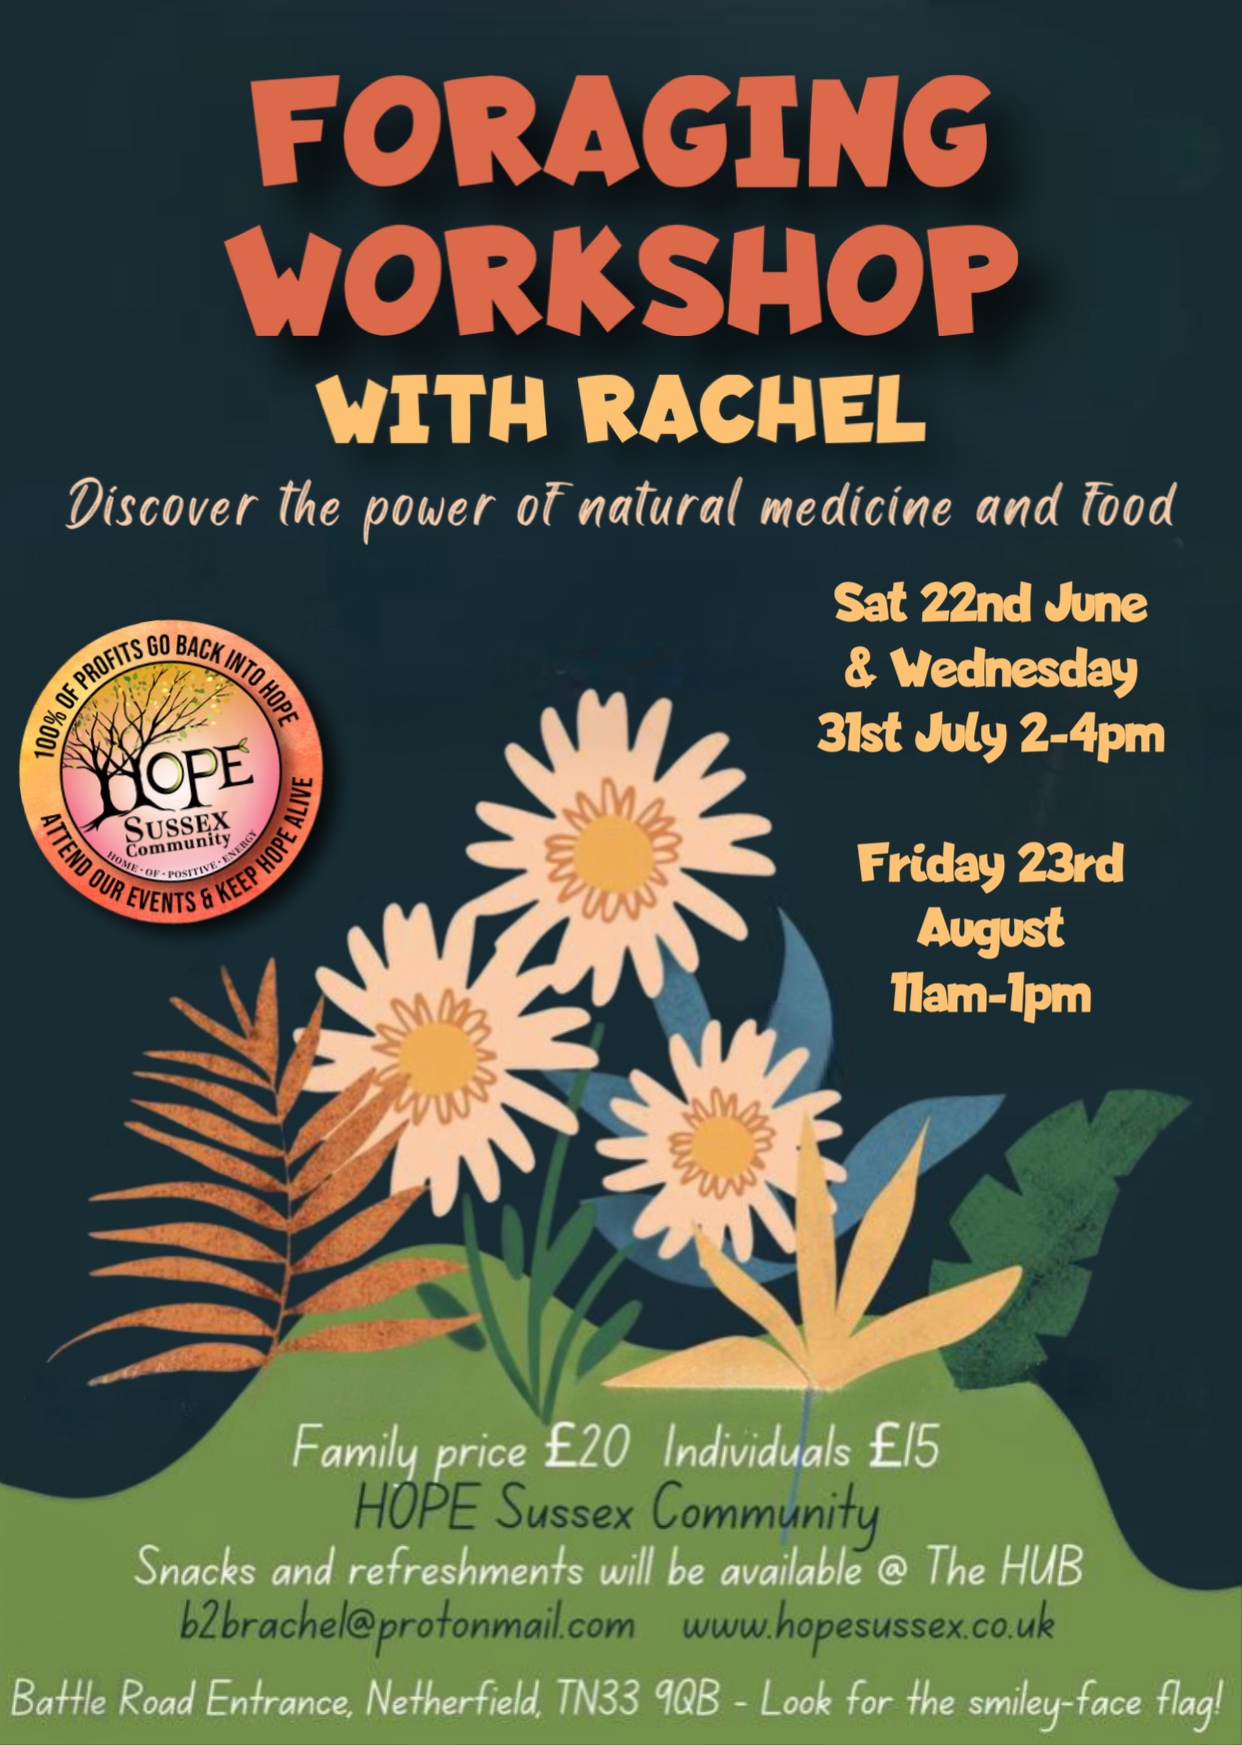 Food Foraging Workshop with Rachel | HOPE Sussex Community